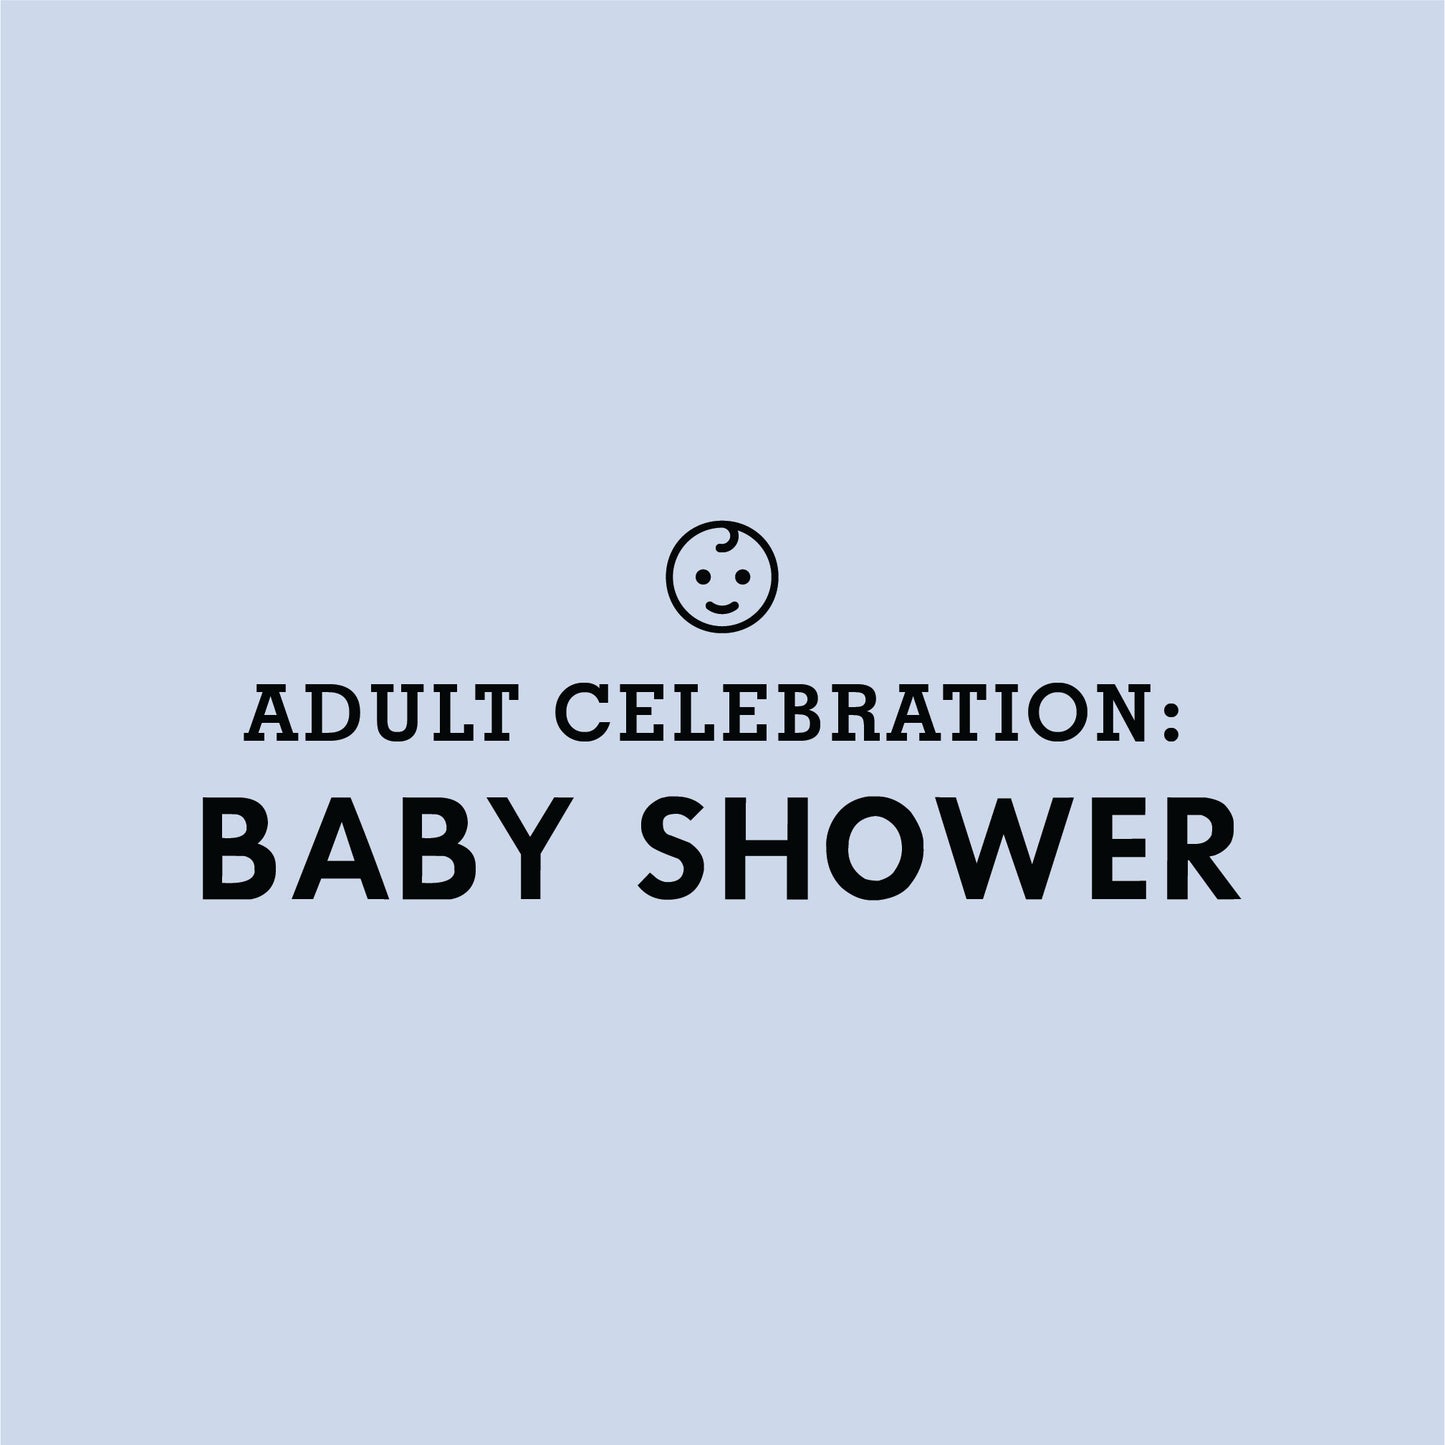 ADULT CELEBRATION: Baby Shower